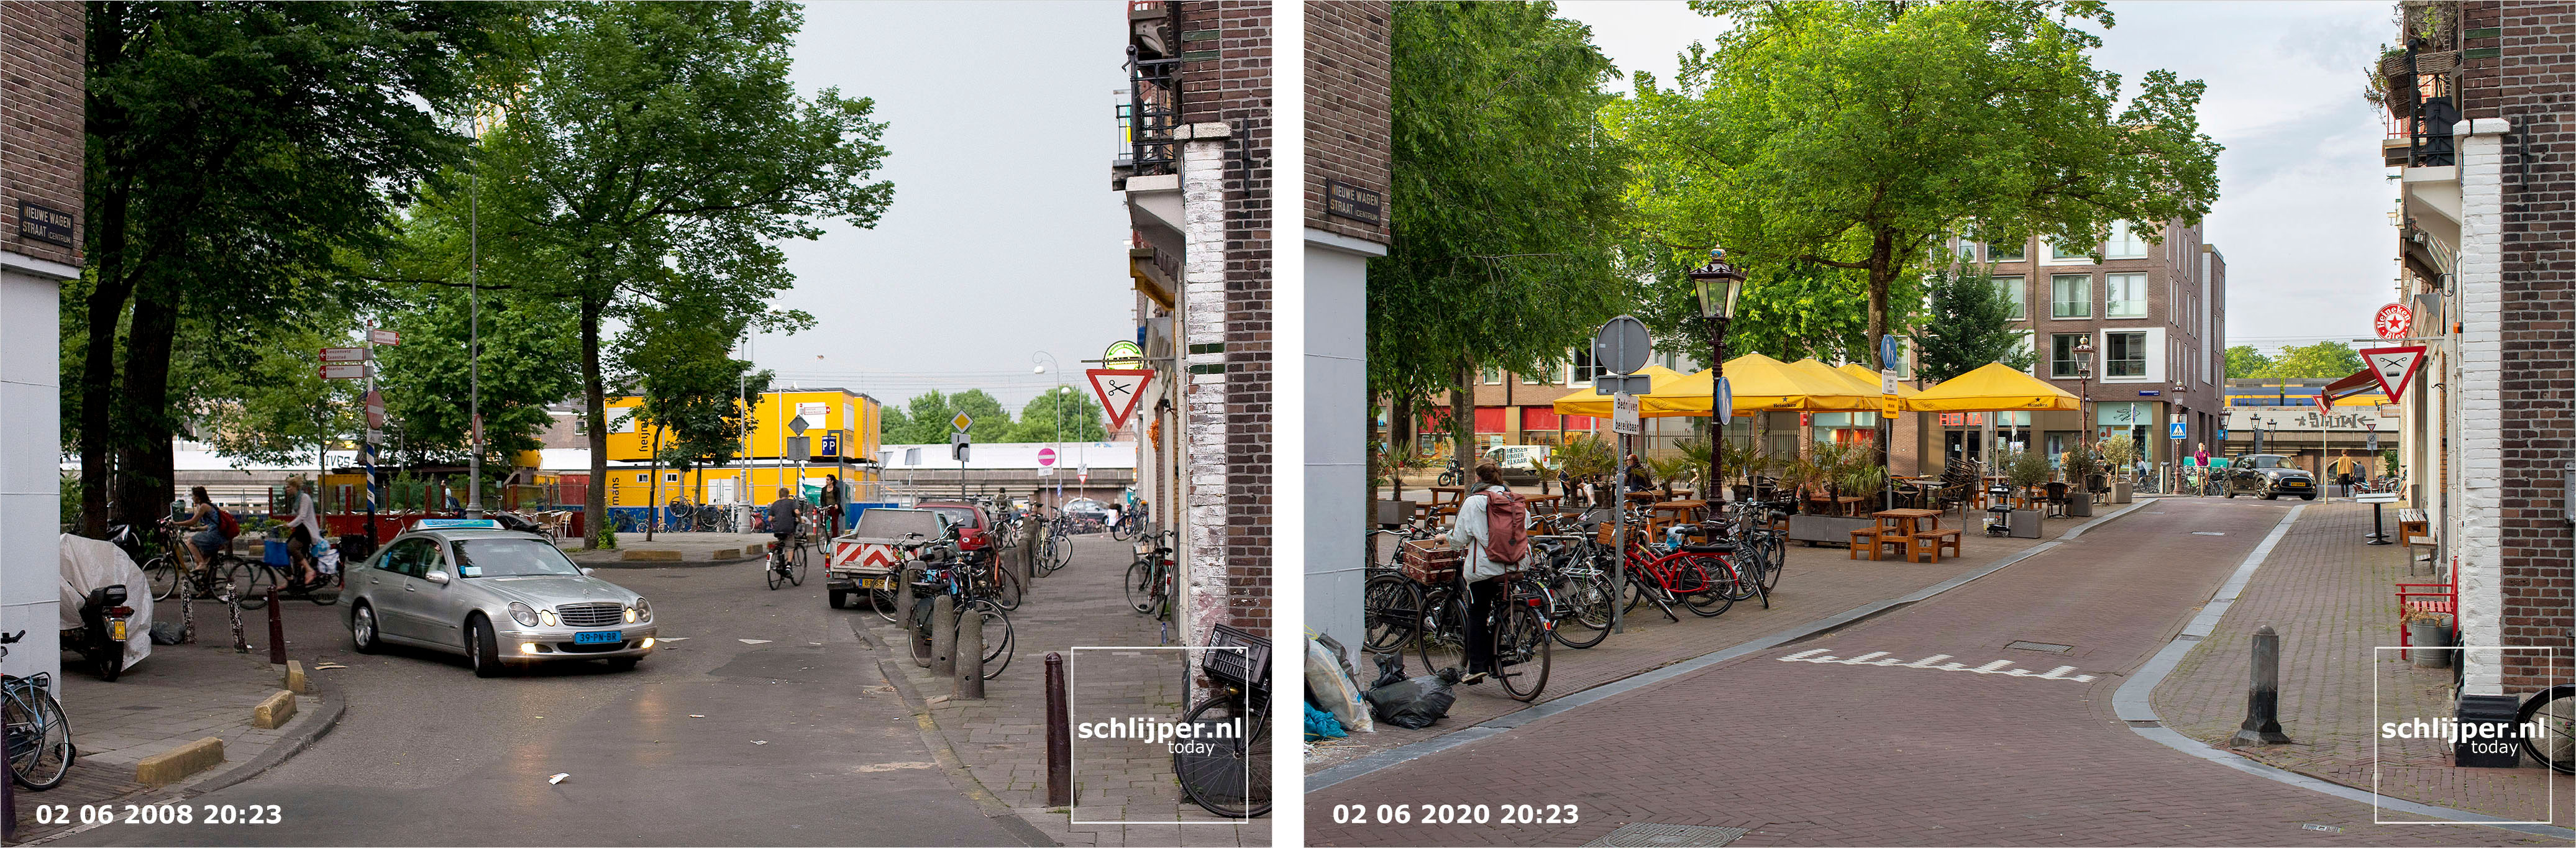 Nederland, Amsterdam, 2 juni 2008 / 2020